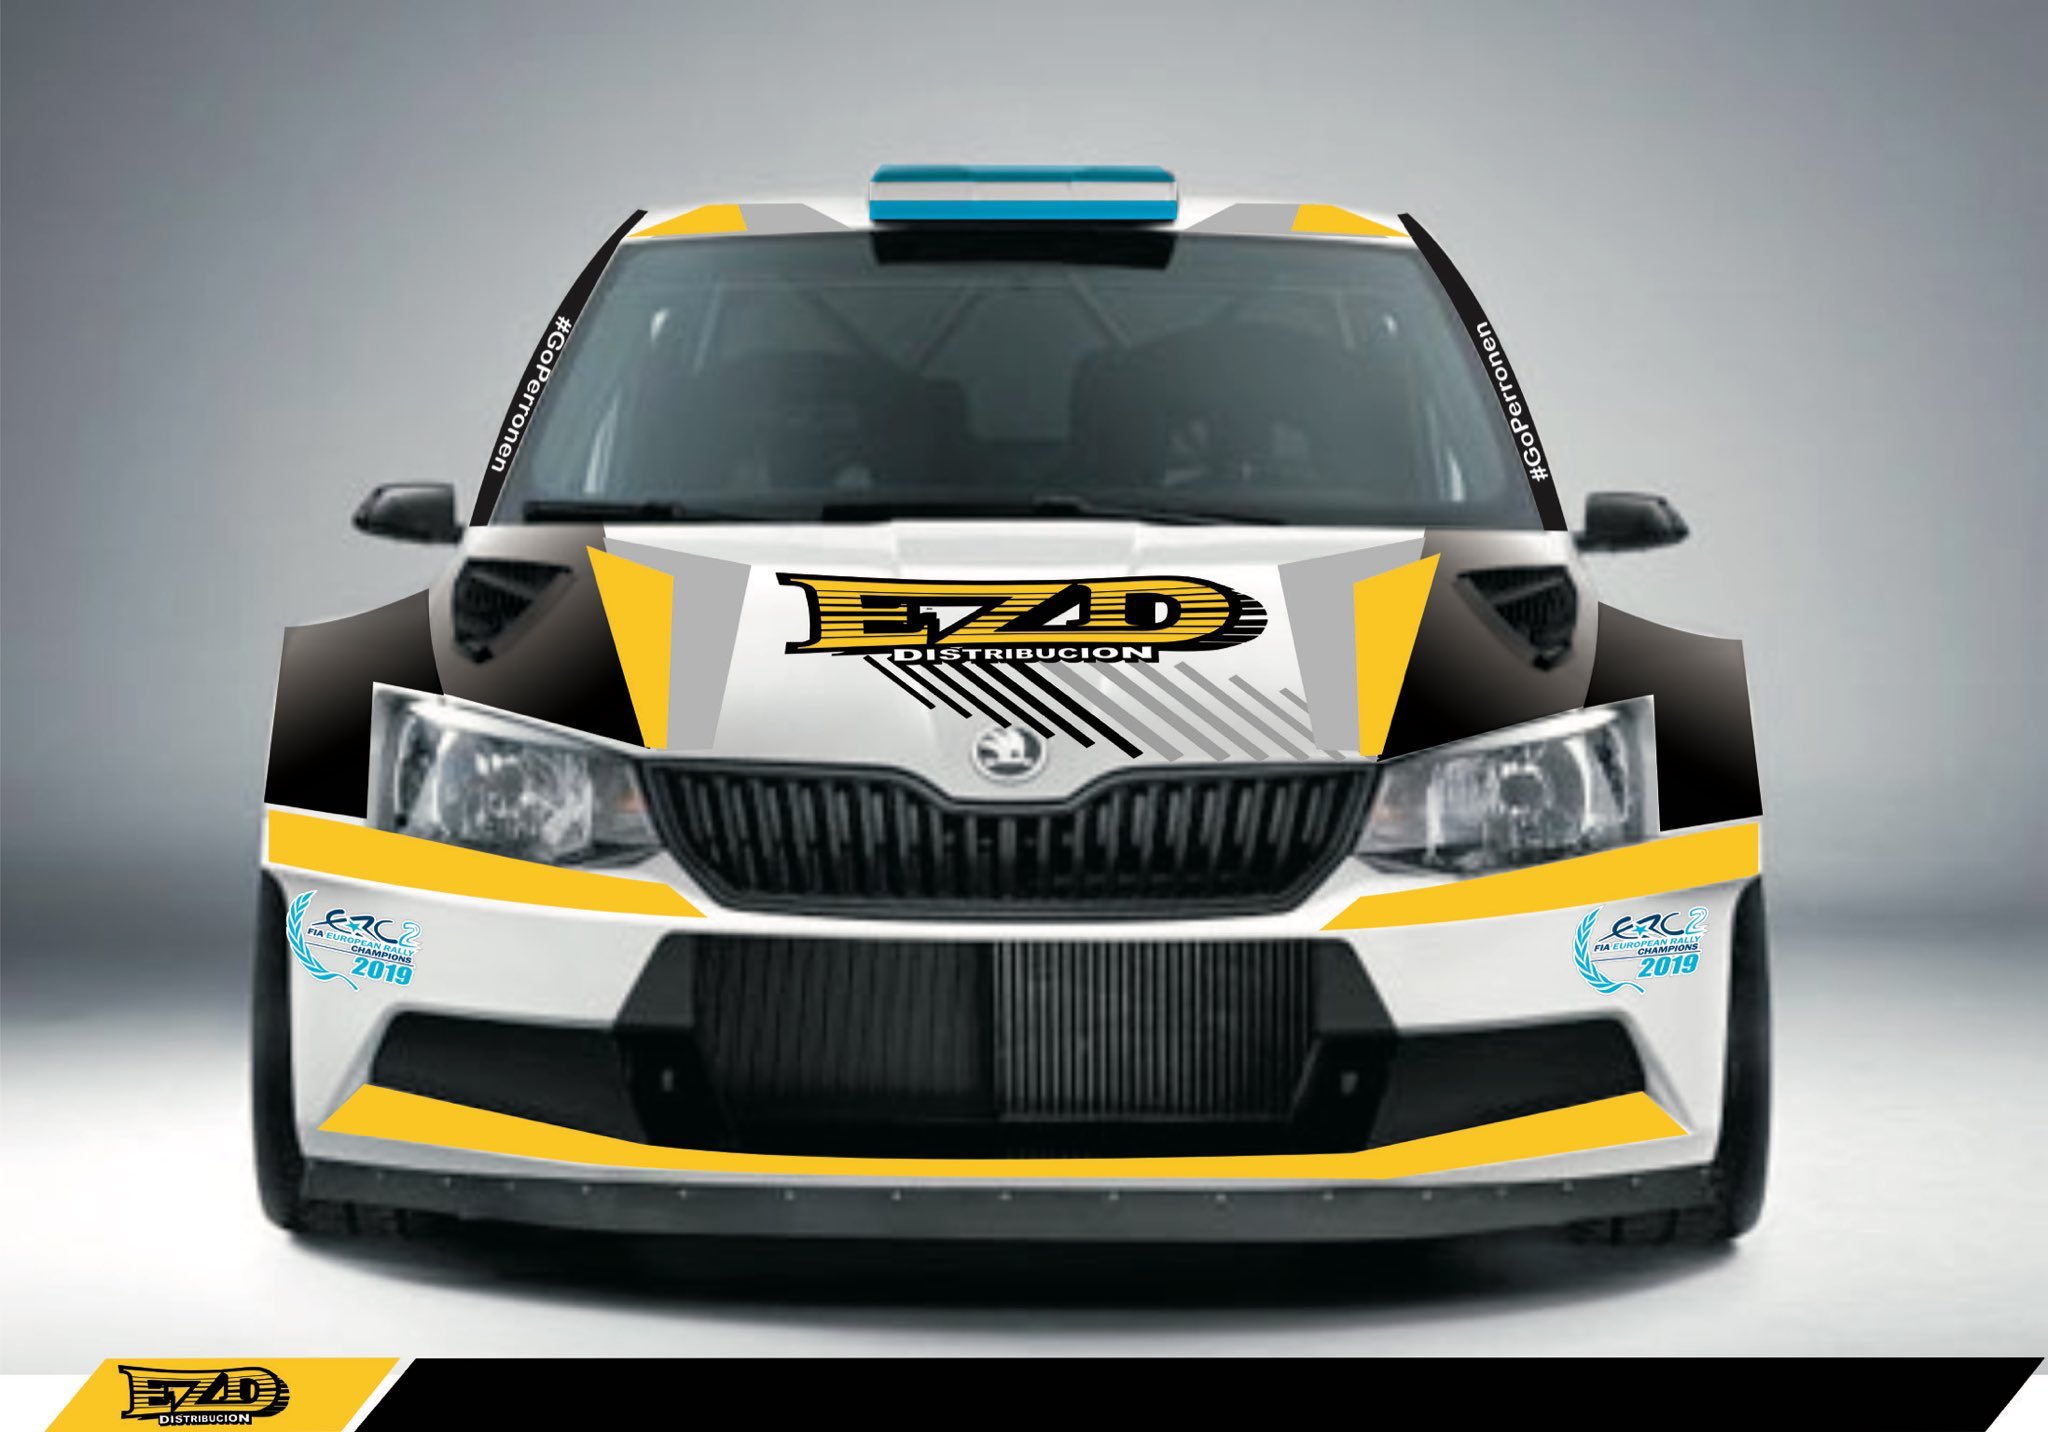 FIA European Rally Championship: Temporada 2020 - Página 3 ESaxpnTXkAAJV_V?format=jpg&name=large